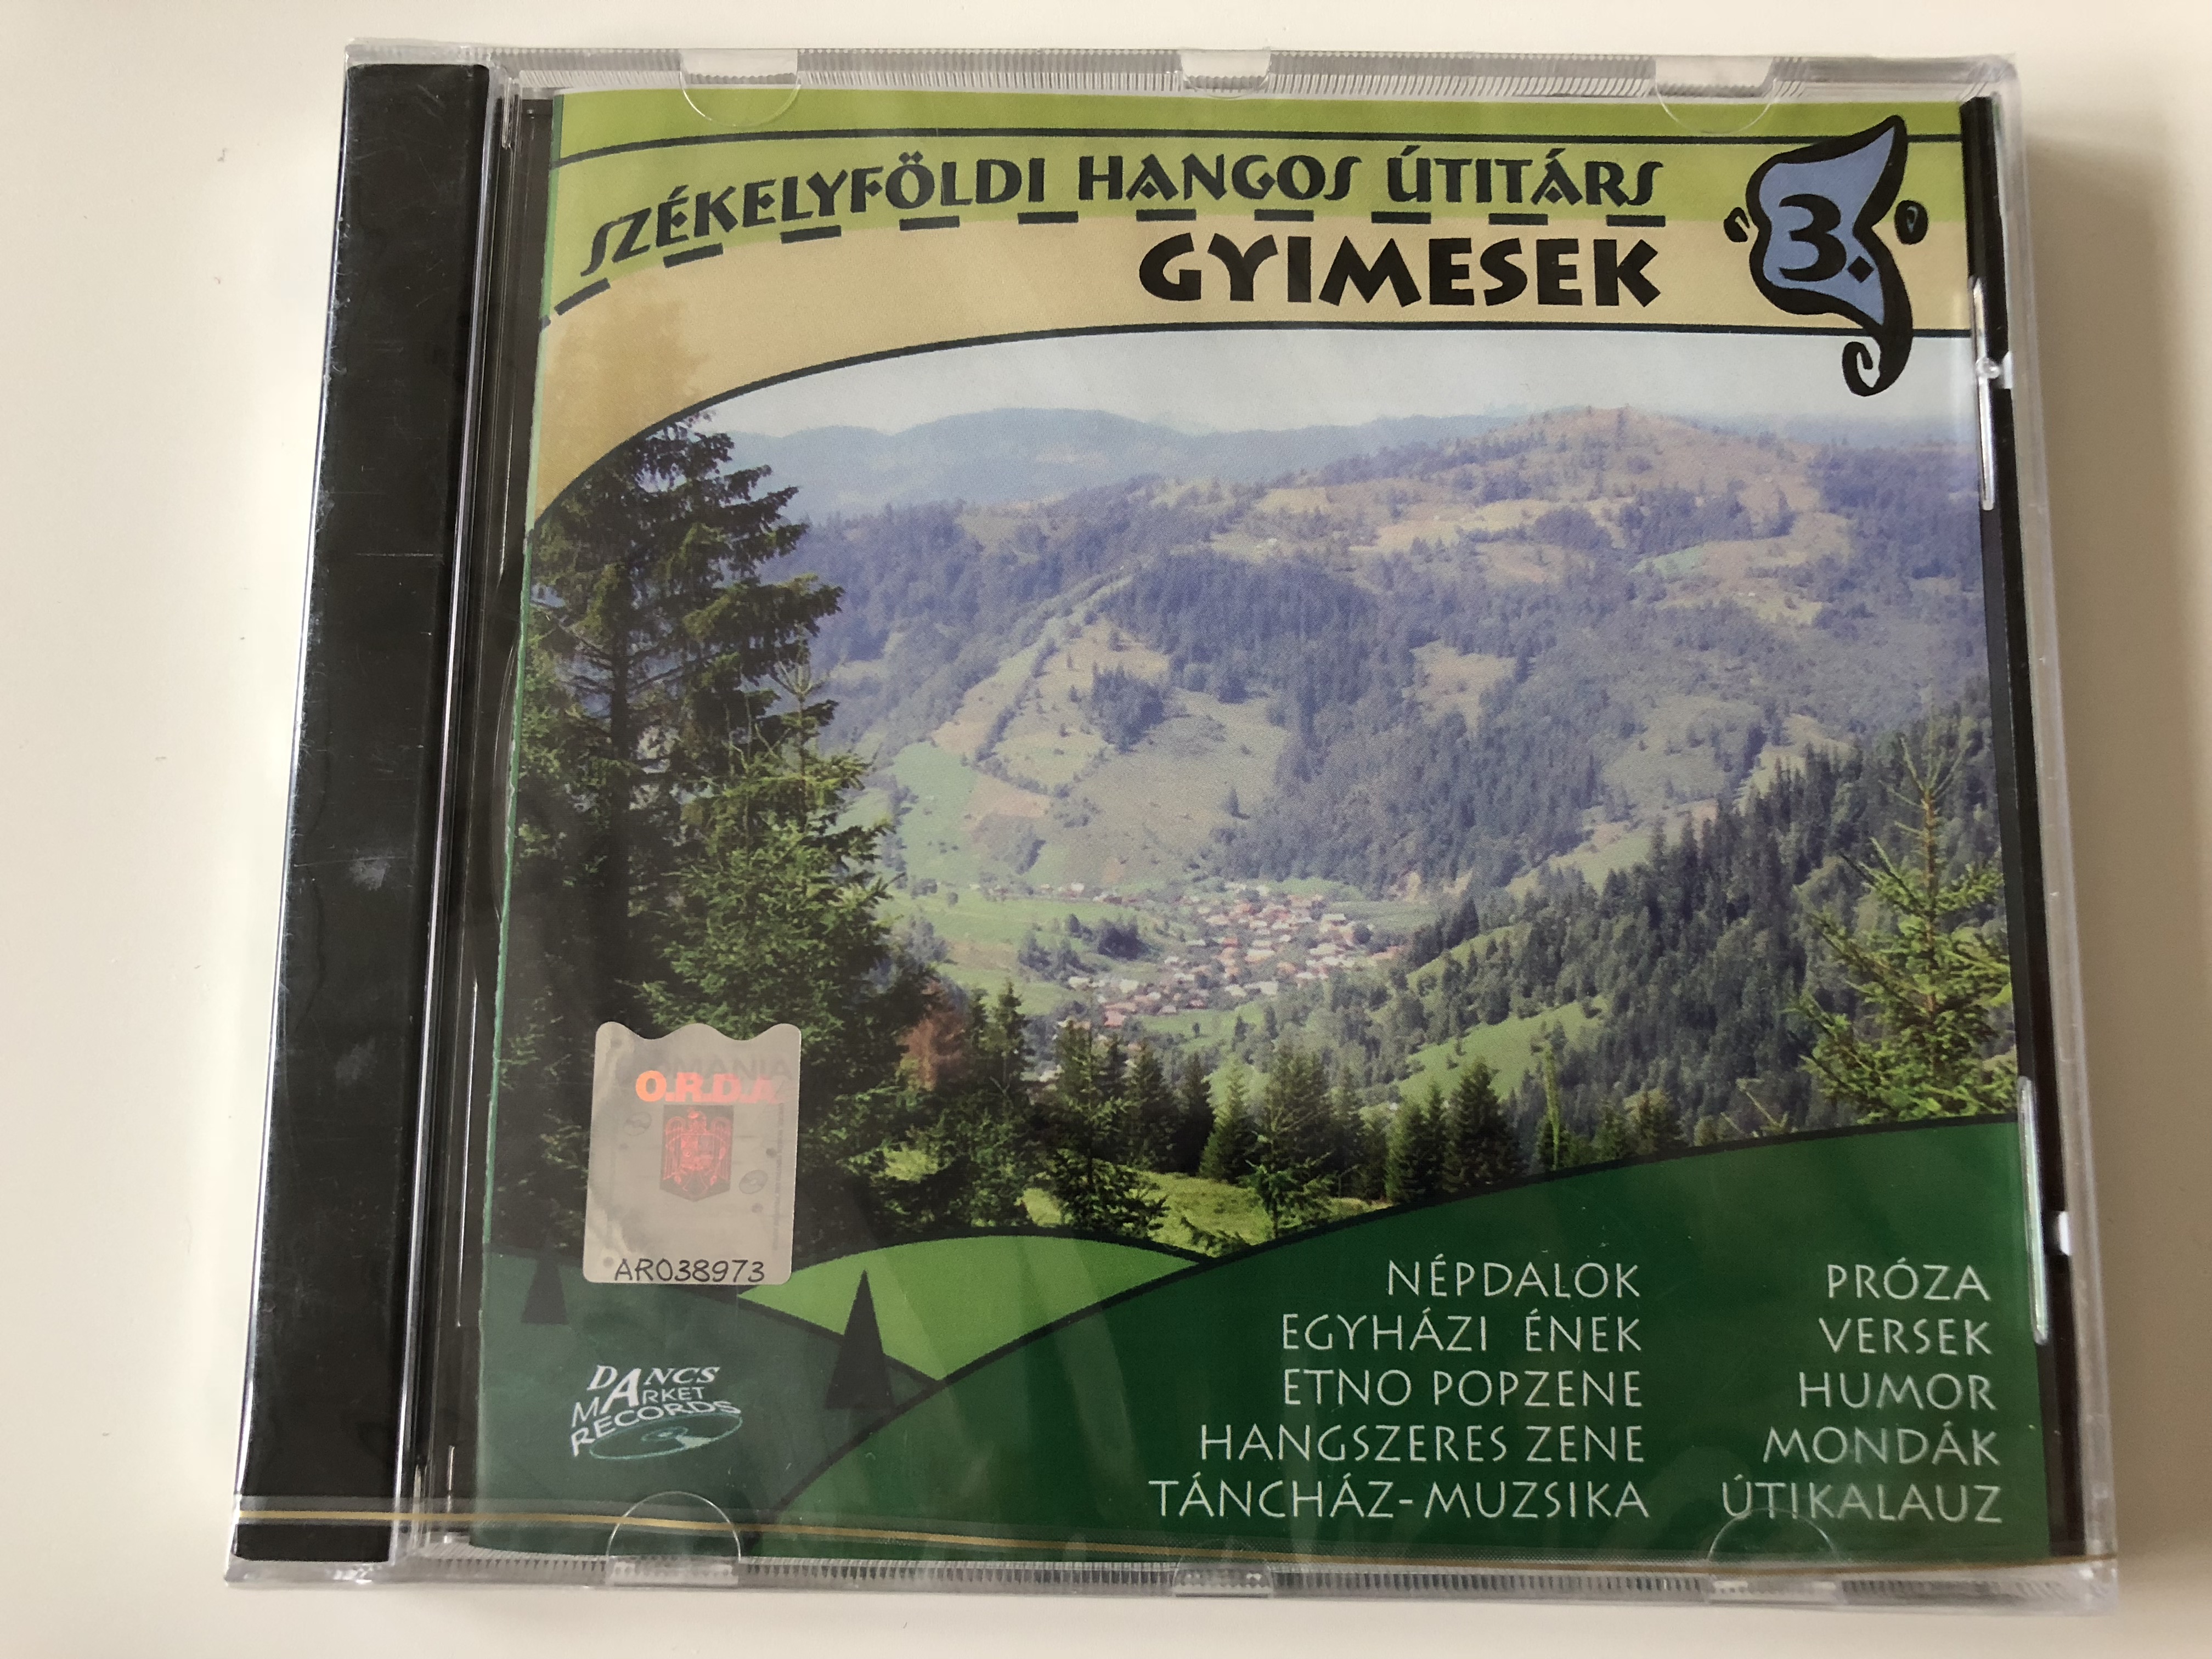 sz-kelyf-ldi-hangos-utit-rs-3.-cd-hungarian-audio-guide-to-transylvania-no.-3-dancs-market-records-1-.jpg